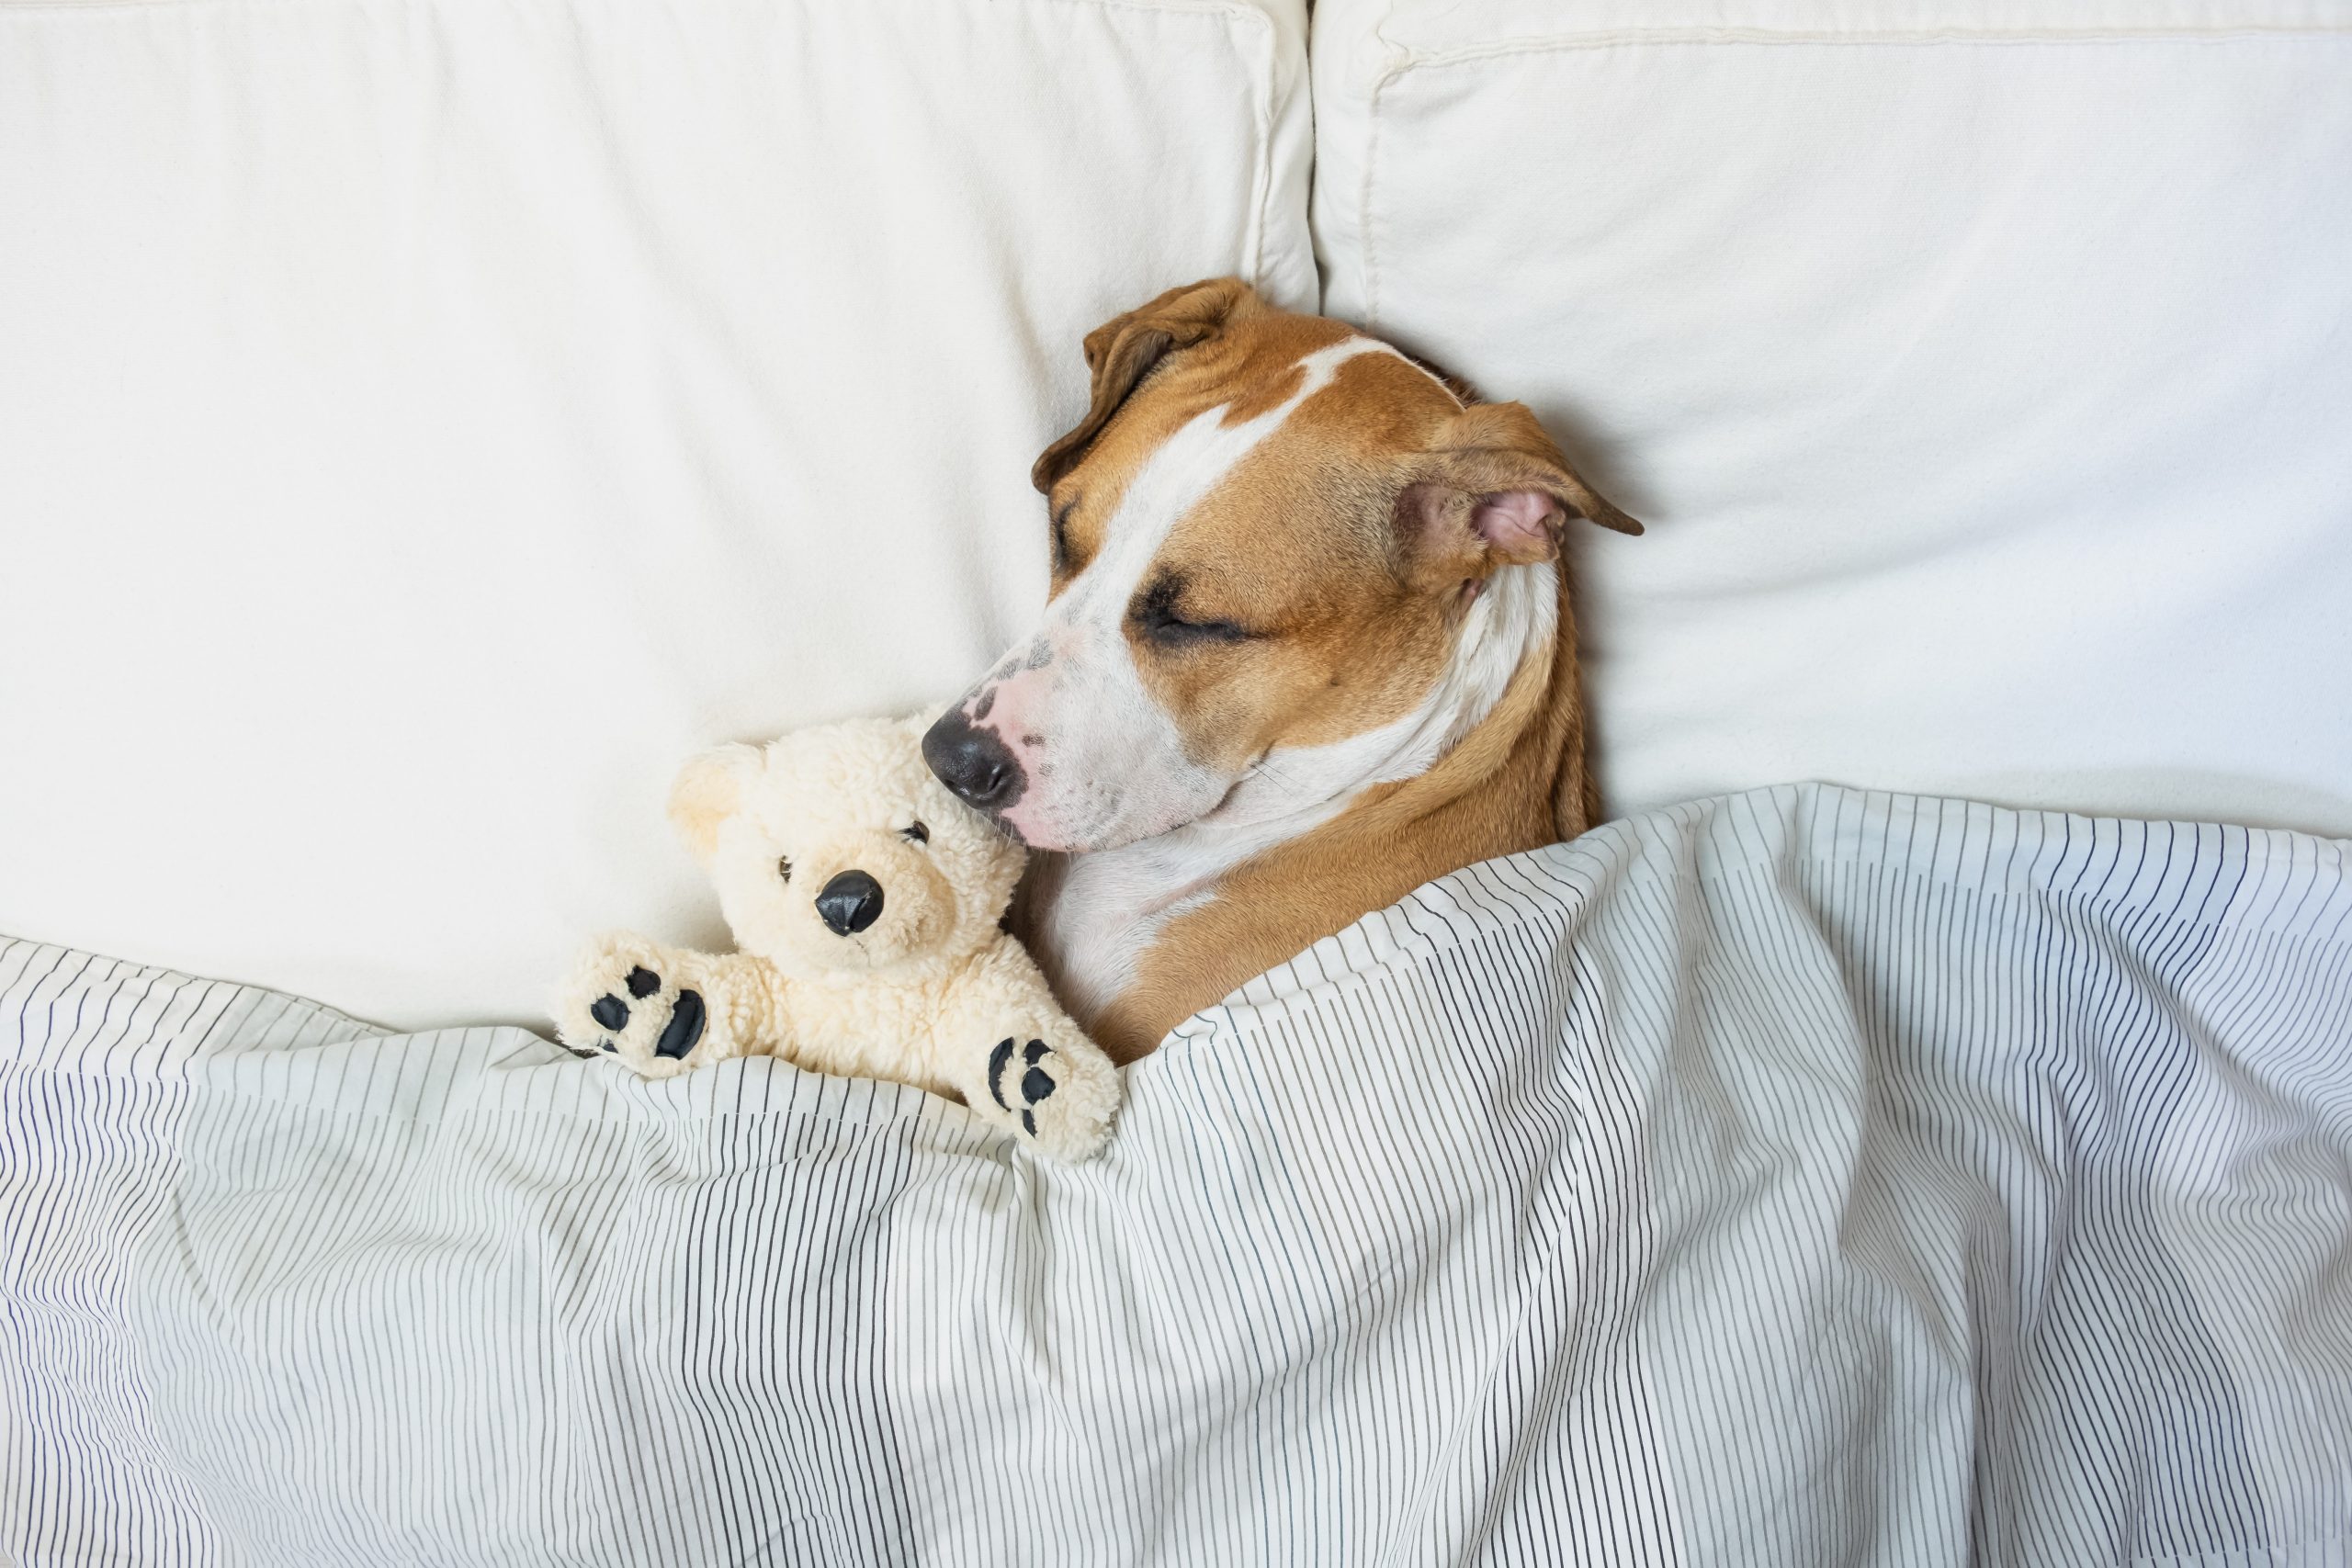 How Many Hours a Day Do Dogs Sleep? How Long Dogs Sleep, Explained